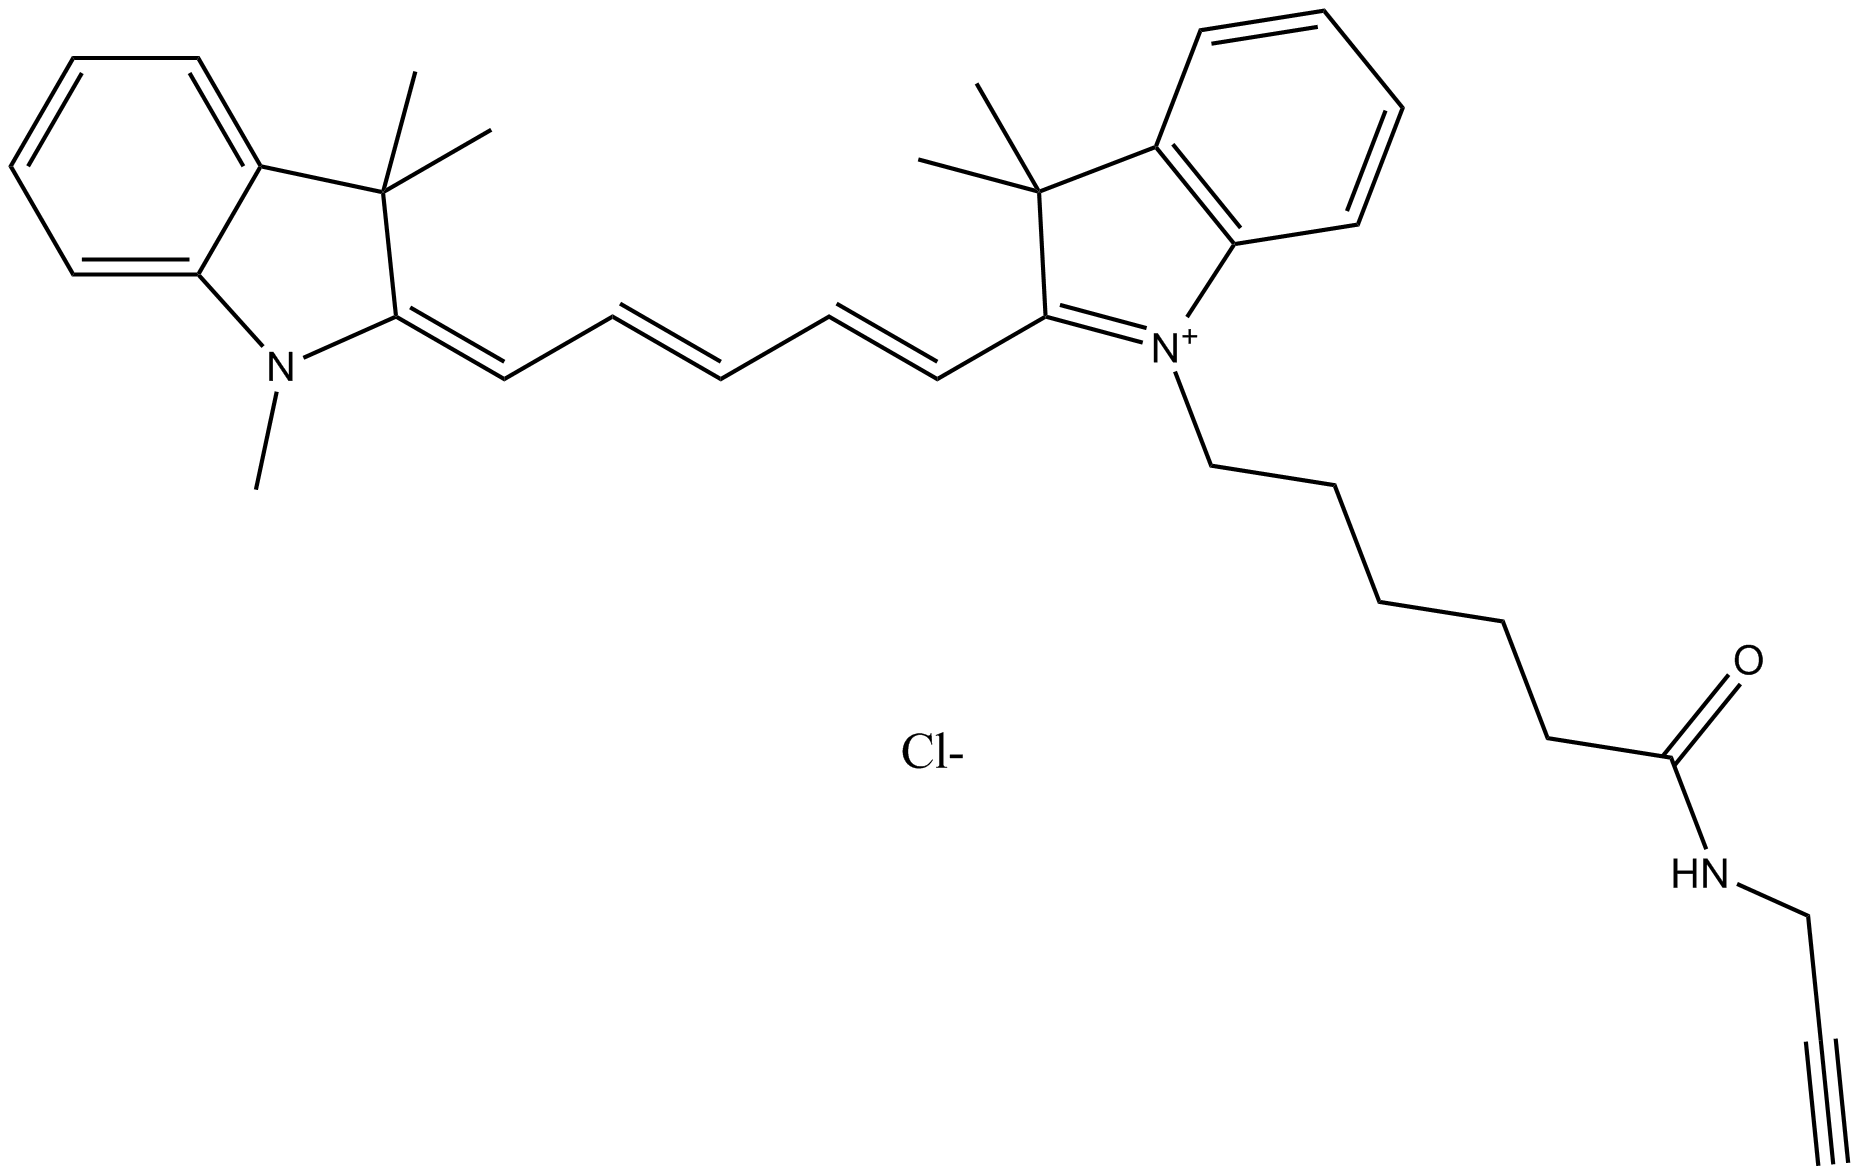 Cy5 alkyne (non-sulfonated)